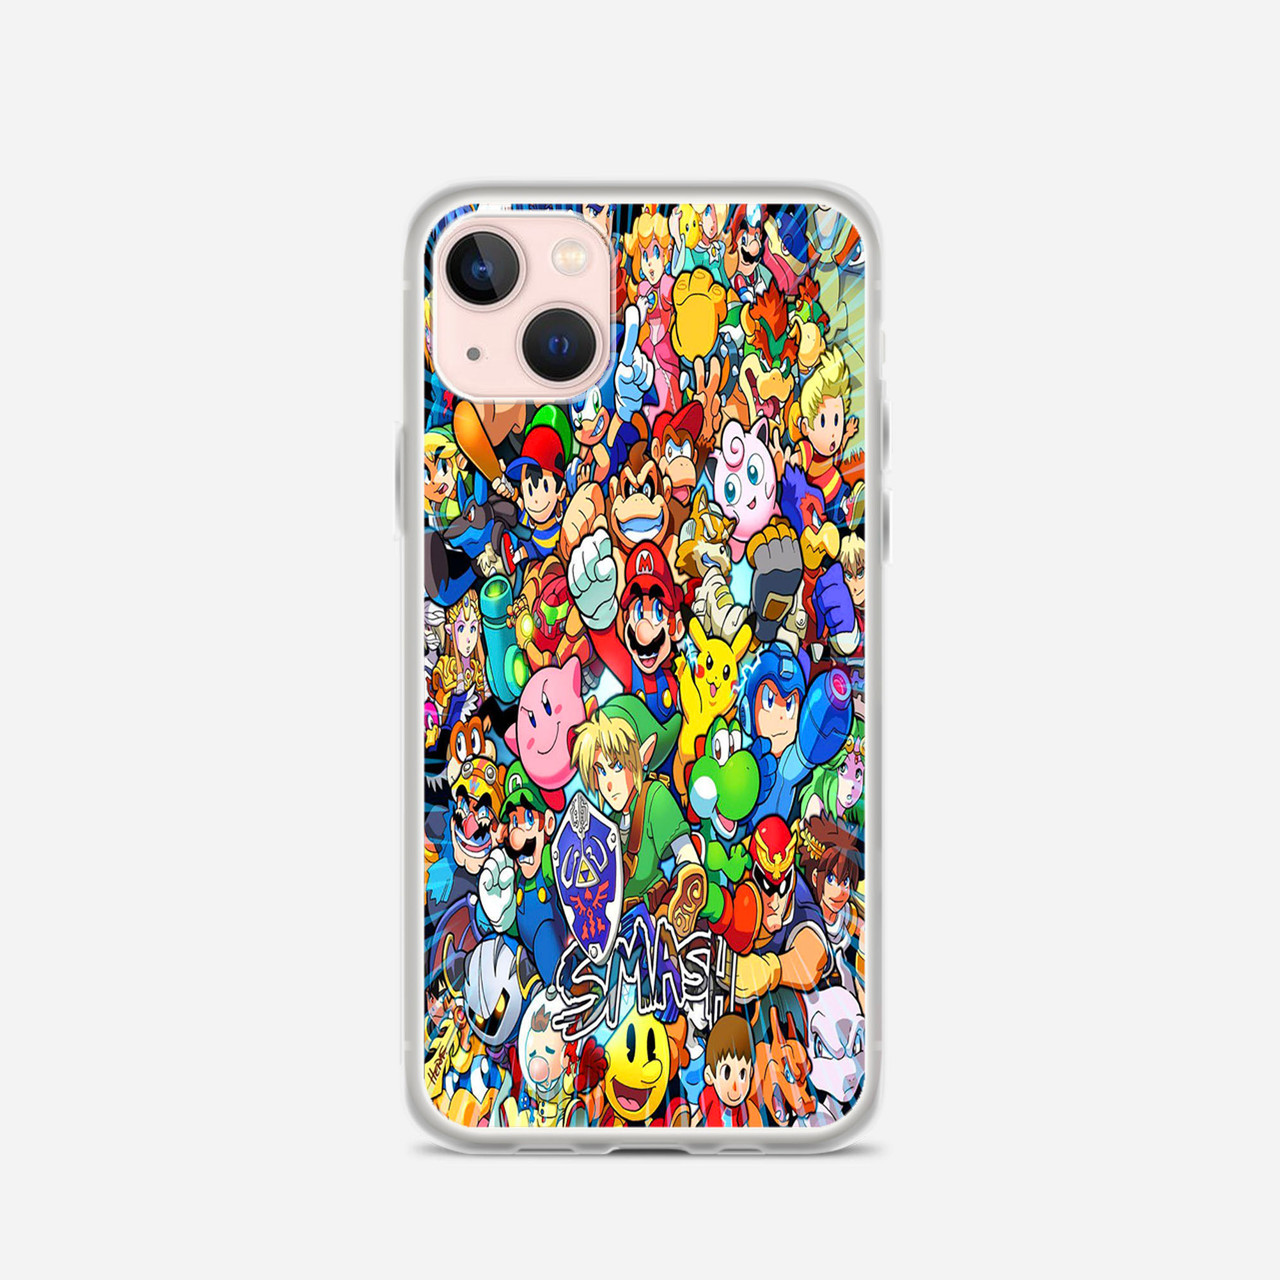 Super Smash Bros Iphone Wallpapers